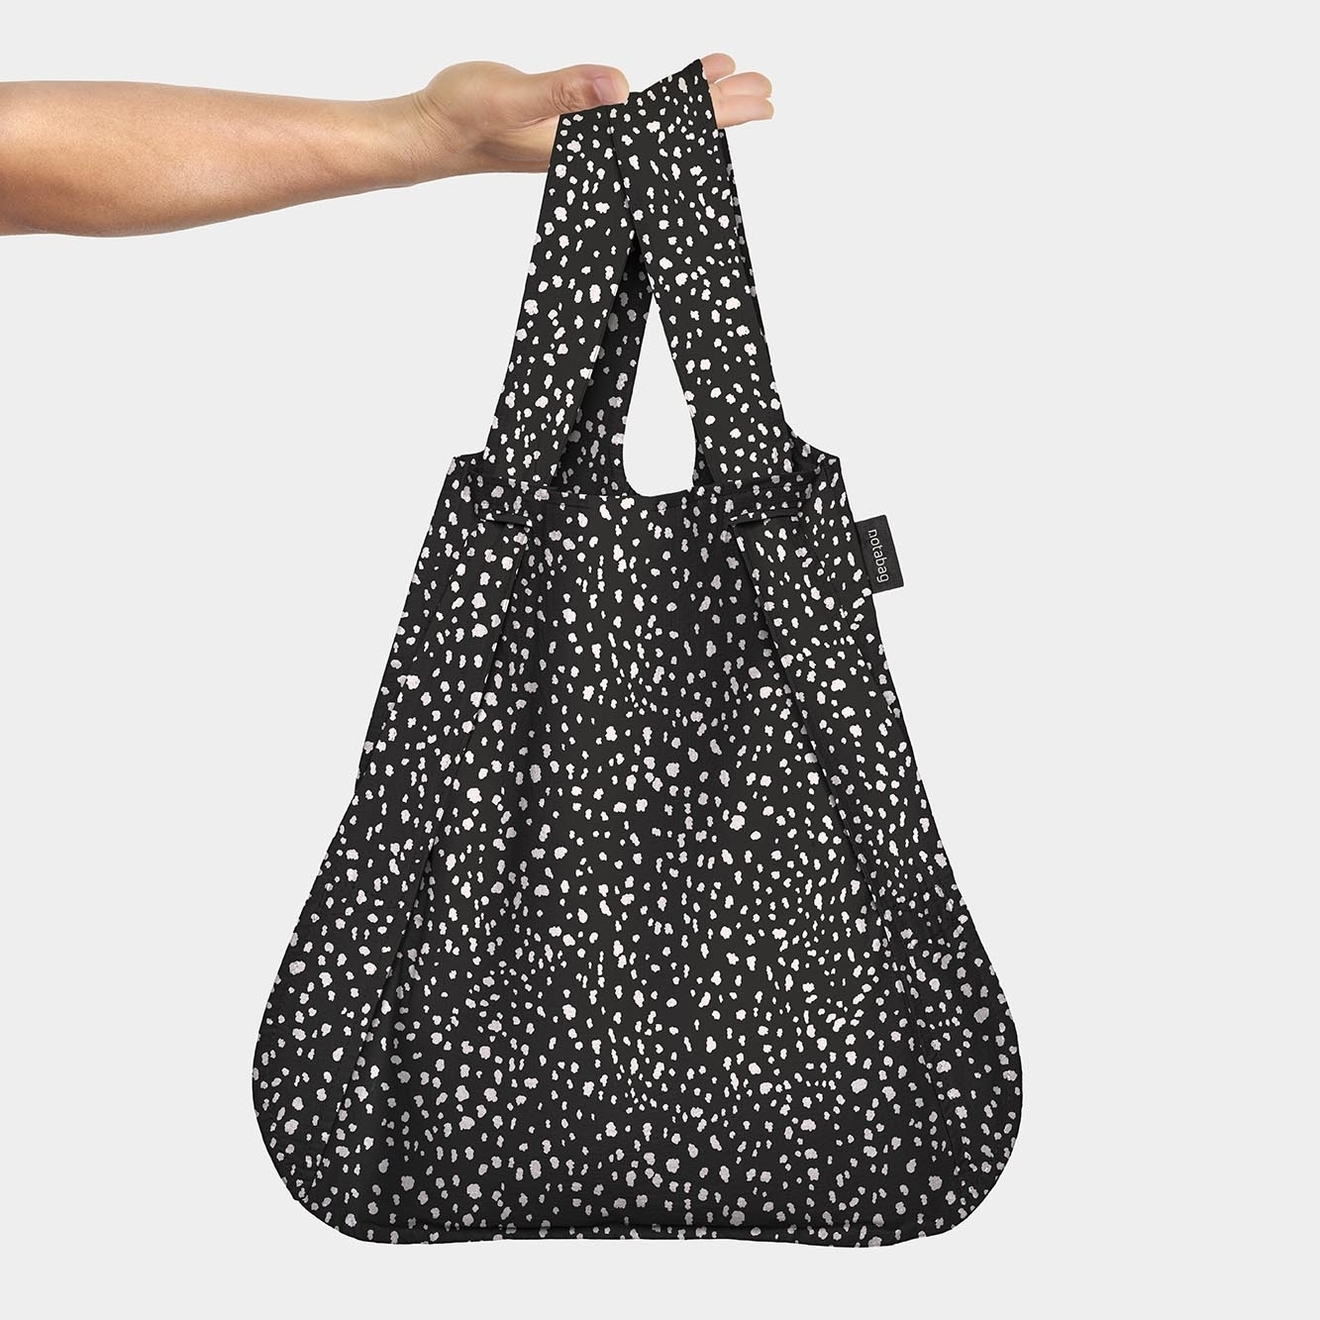 Notabag - Handtasche &amp; Rucksack - schwarz gesprenkelt